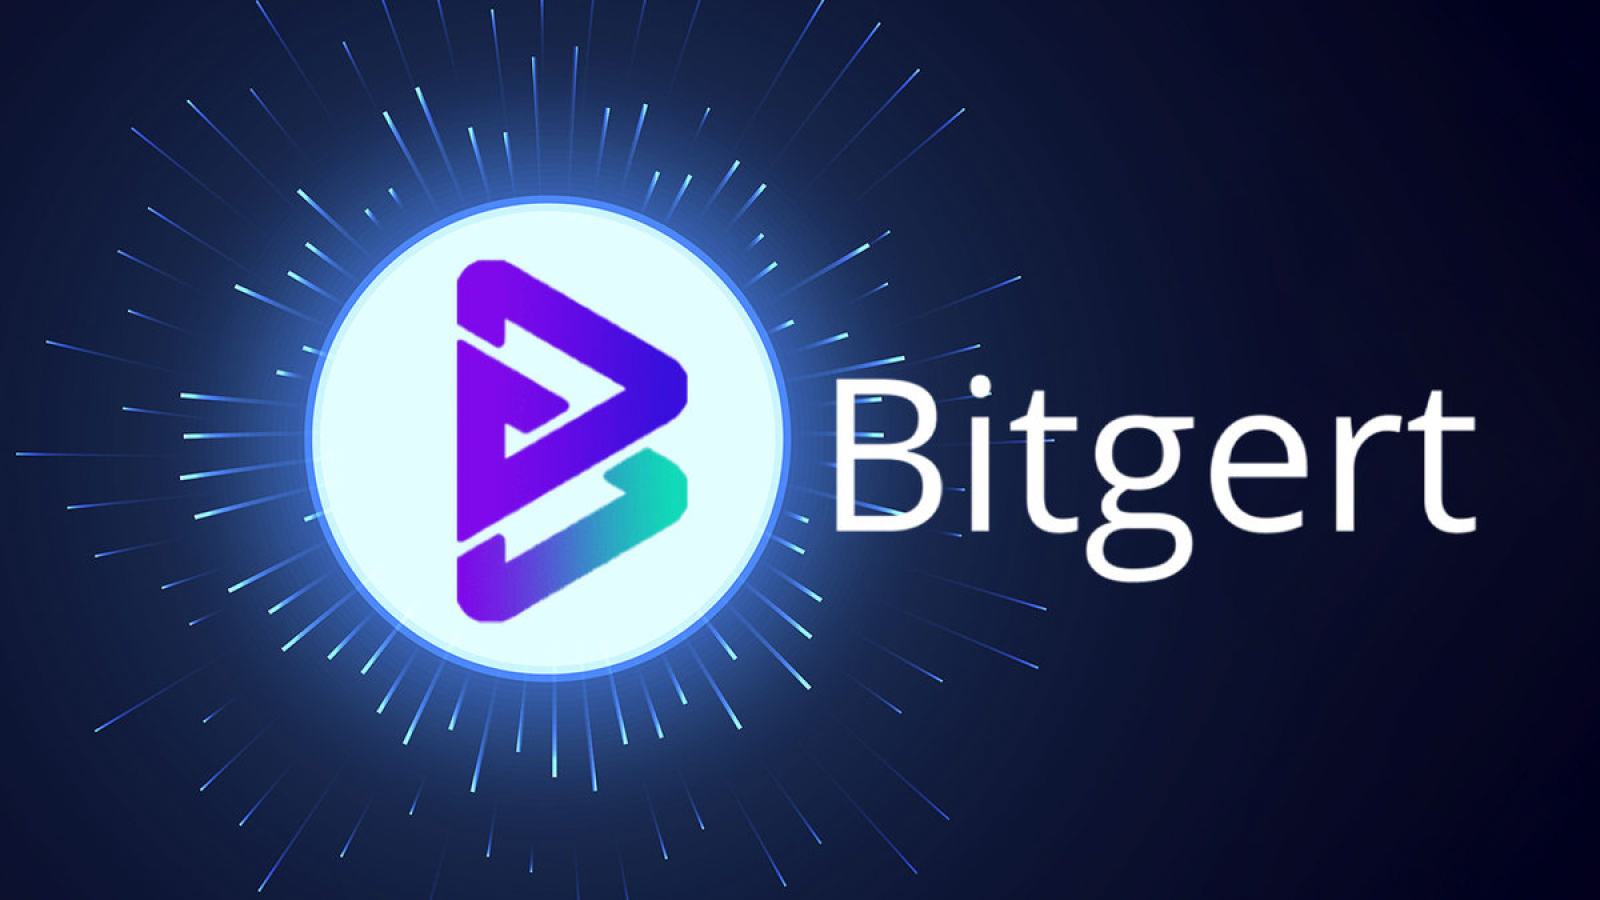 Bitgert Ventures Investment Team Launched by Investors of Bitgert